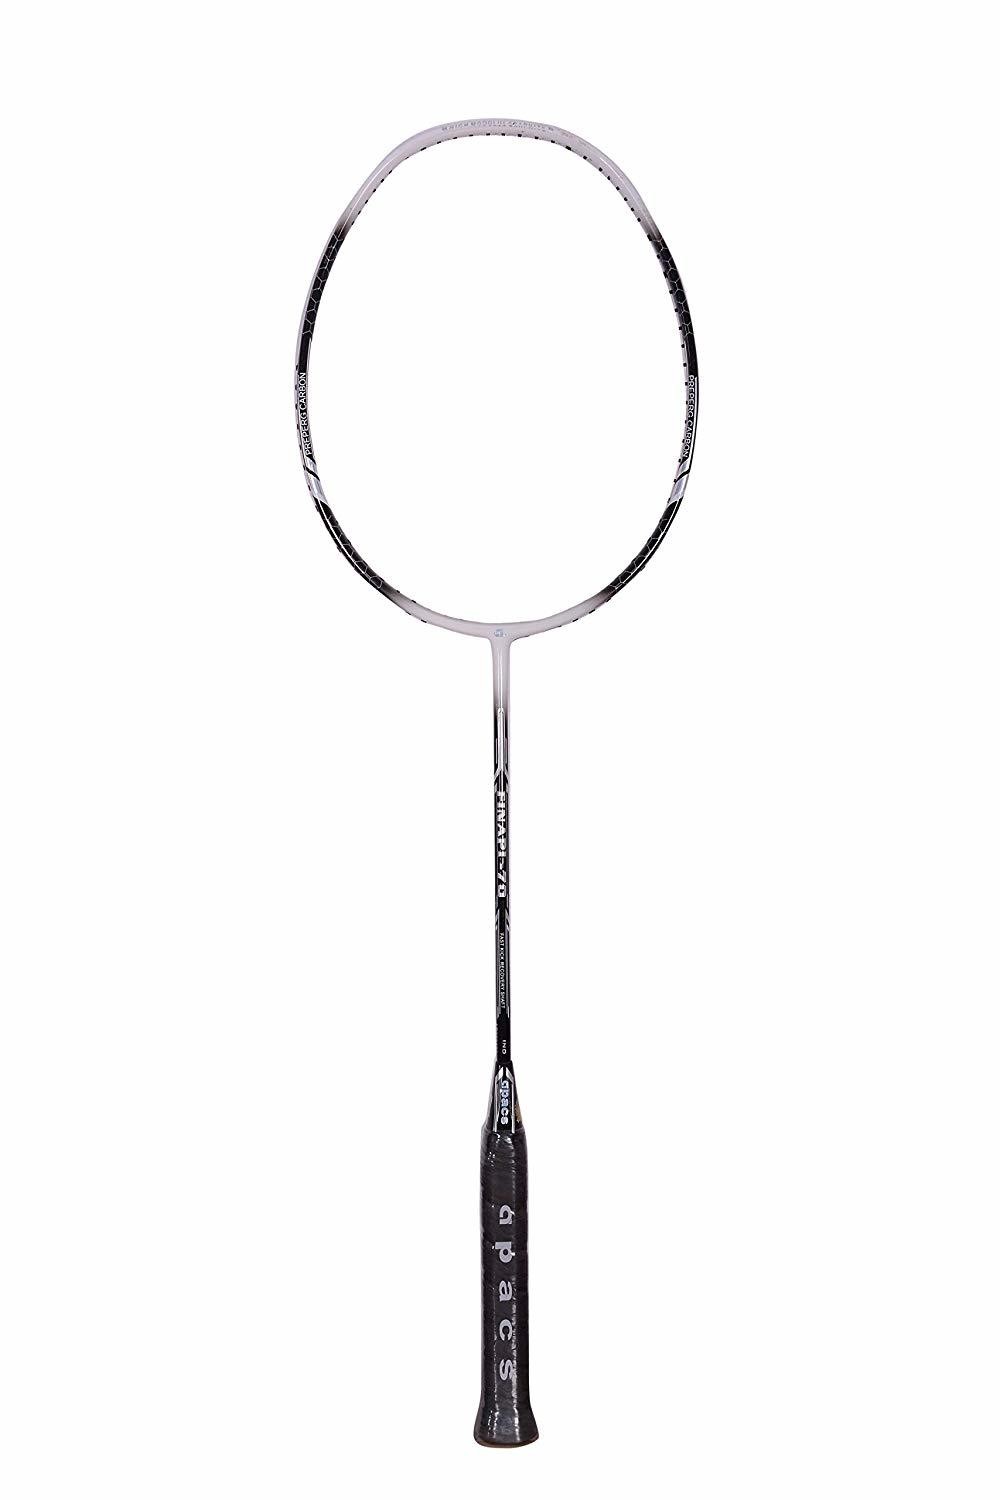 Apacs Commander 20 White Badminton Racquet